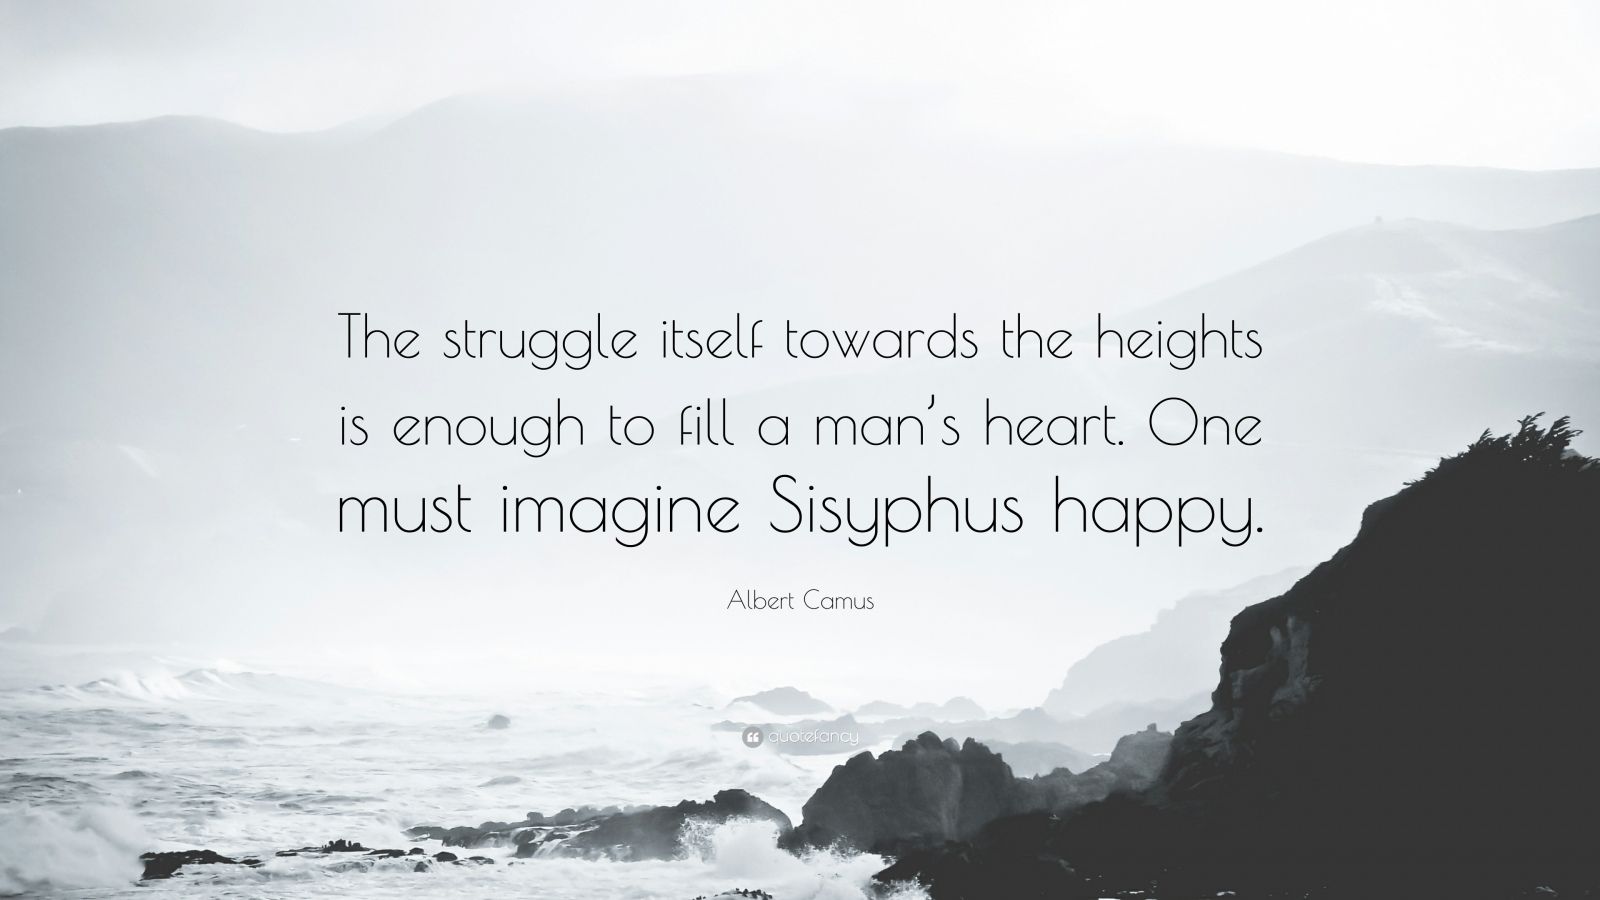 Lessons from Sisyphus on worrying well  by Ram Priyadarshini  Medium